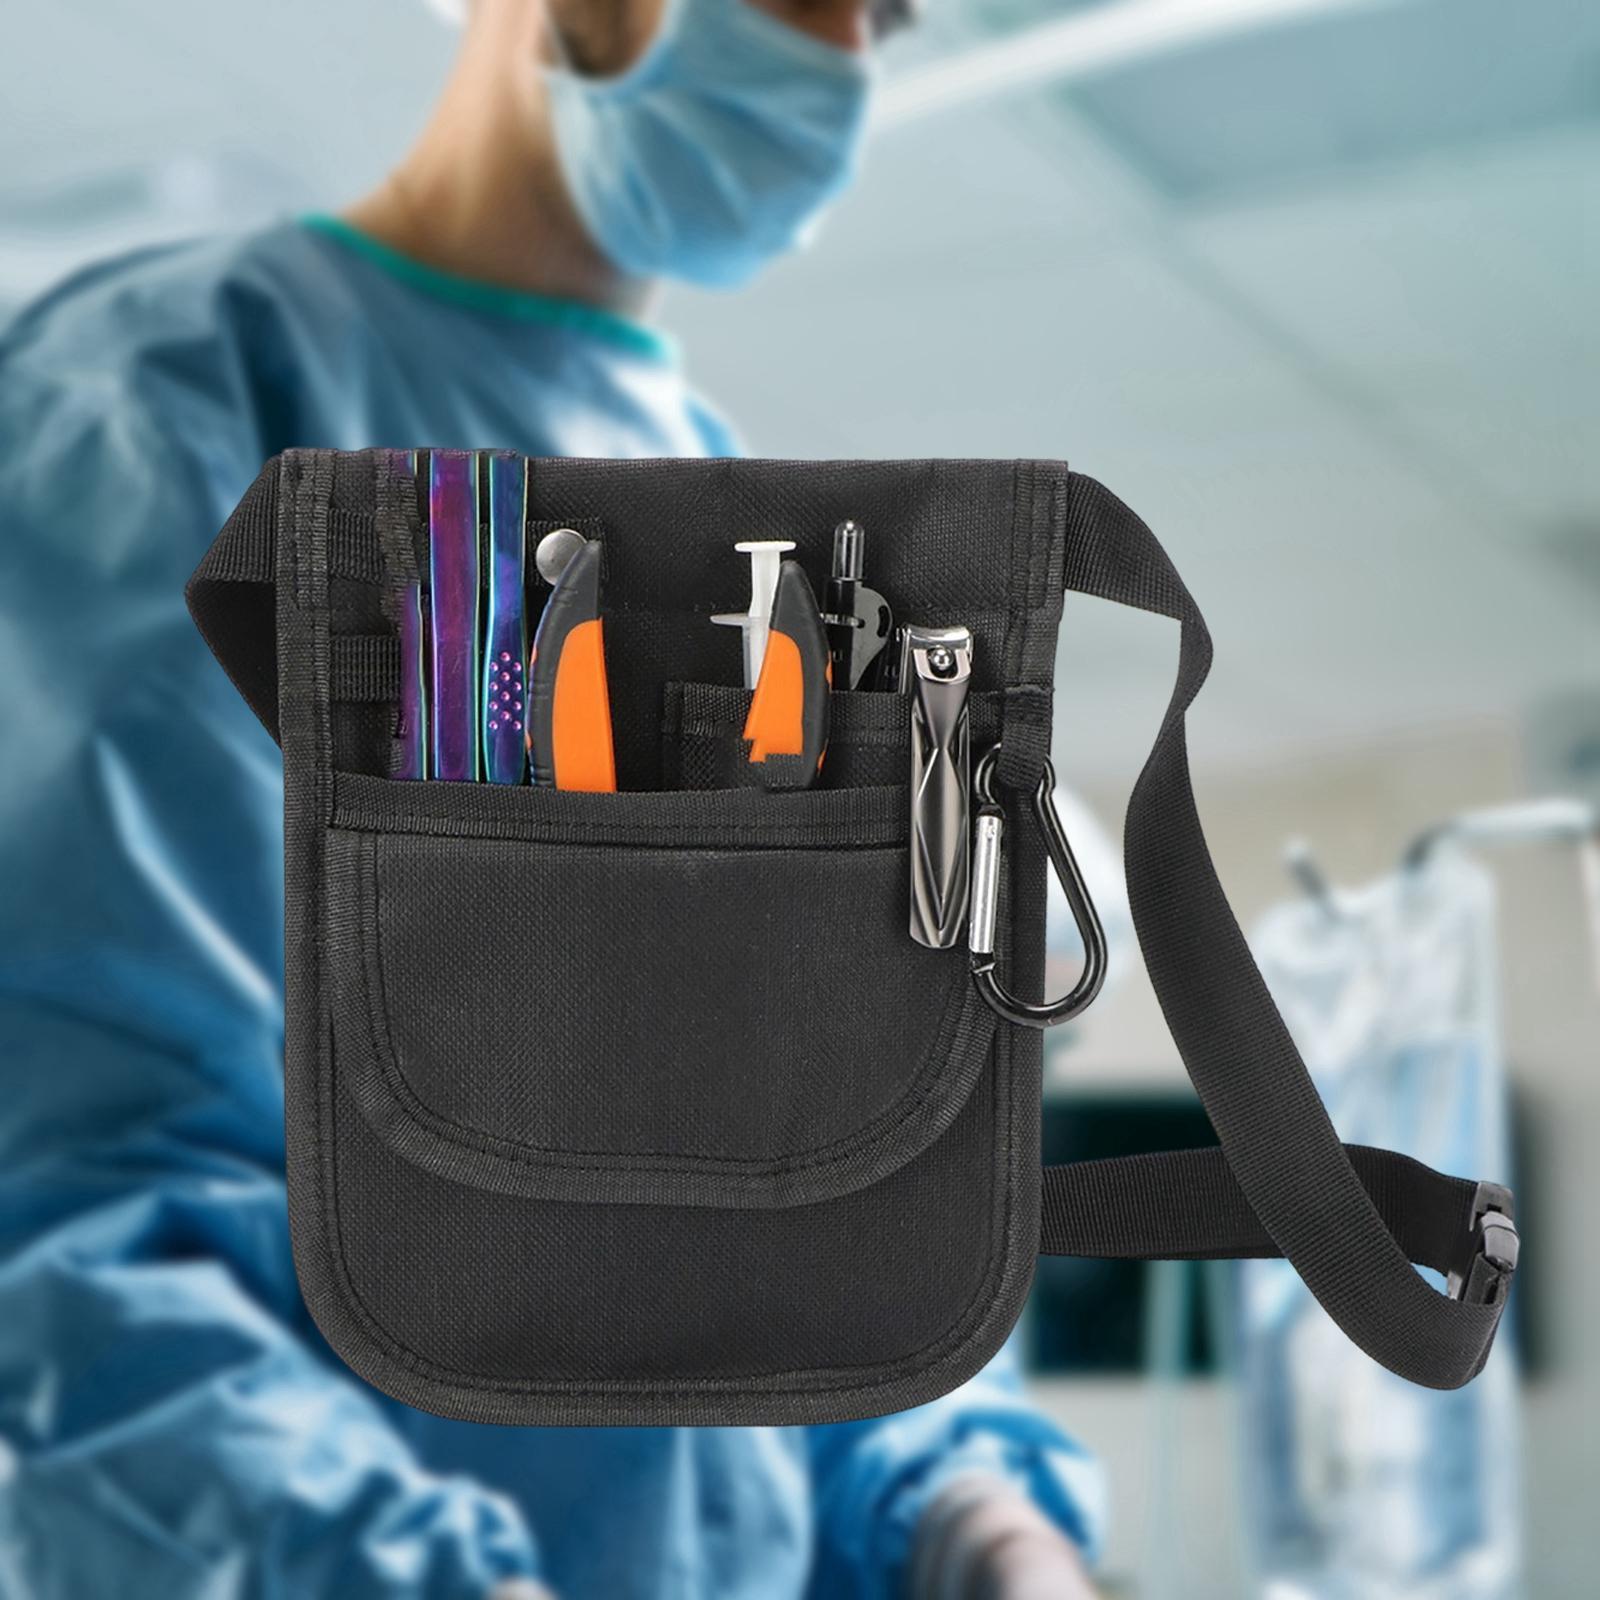 Nurse Fanny Pack Organizer Pouch Holder Utility Hip Bag Black